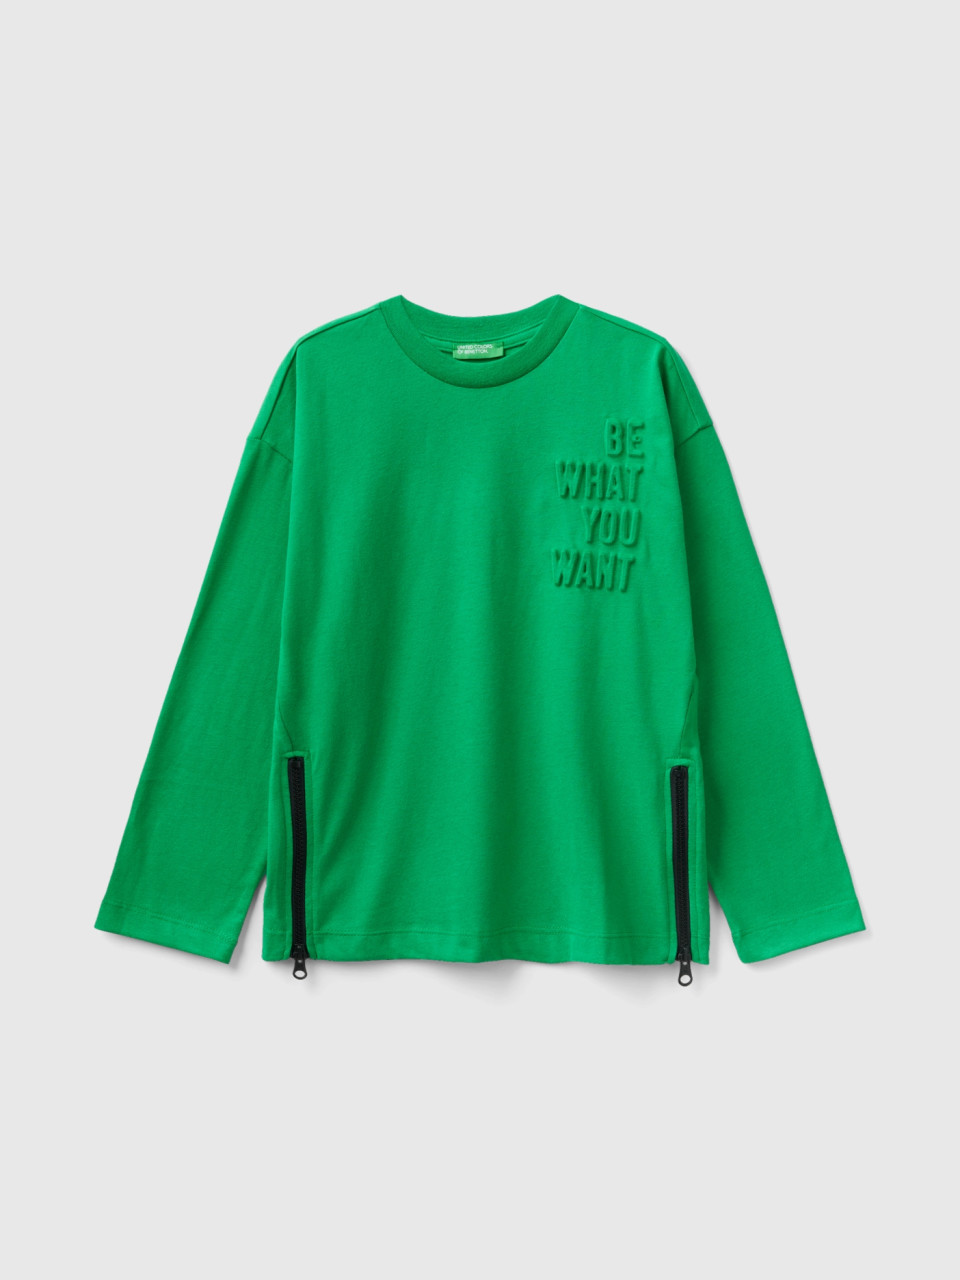 Benetton, Oversized Fit Sweatshirt With Embossed Print, Green, Kids